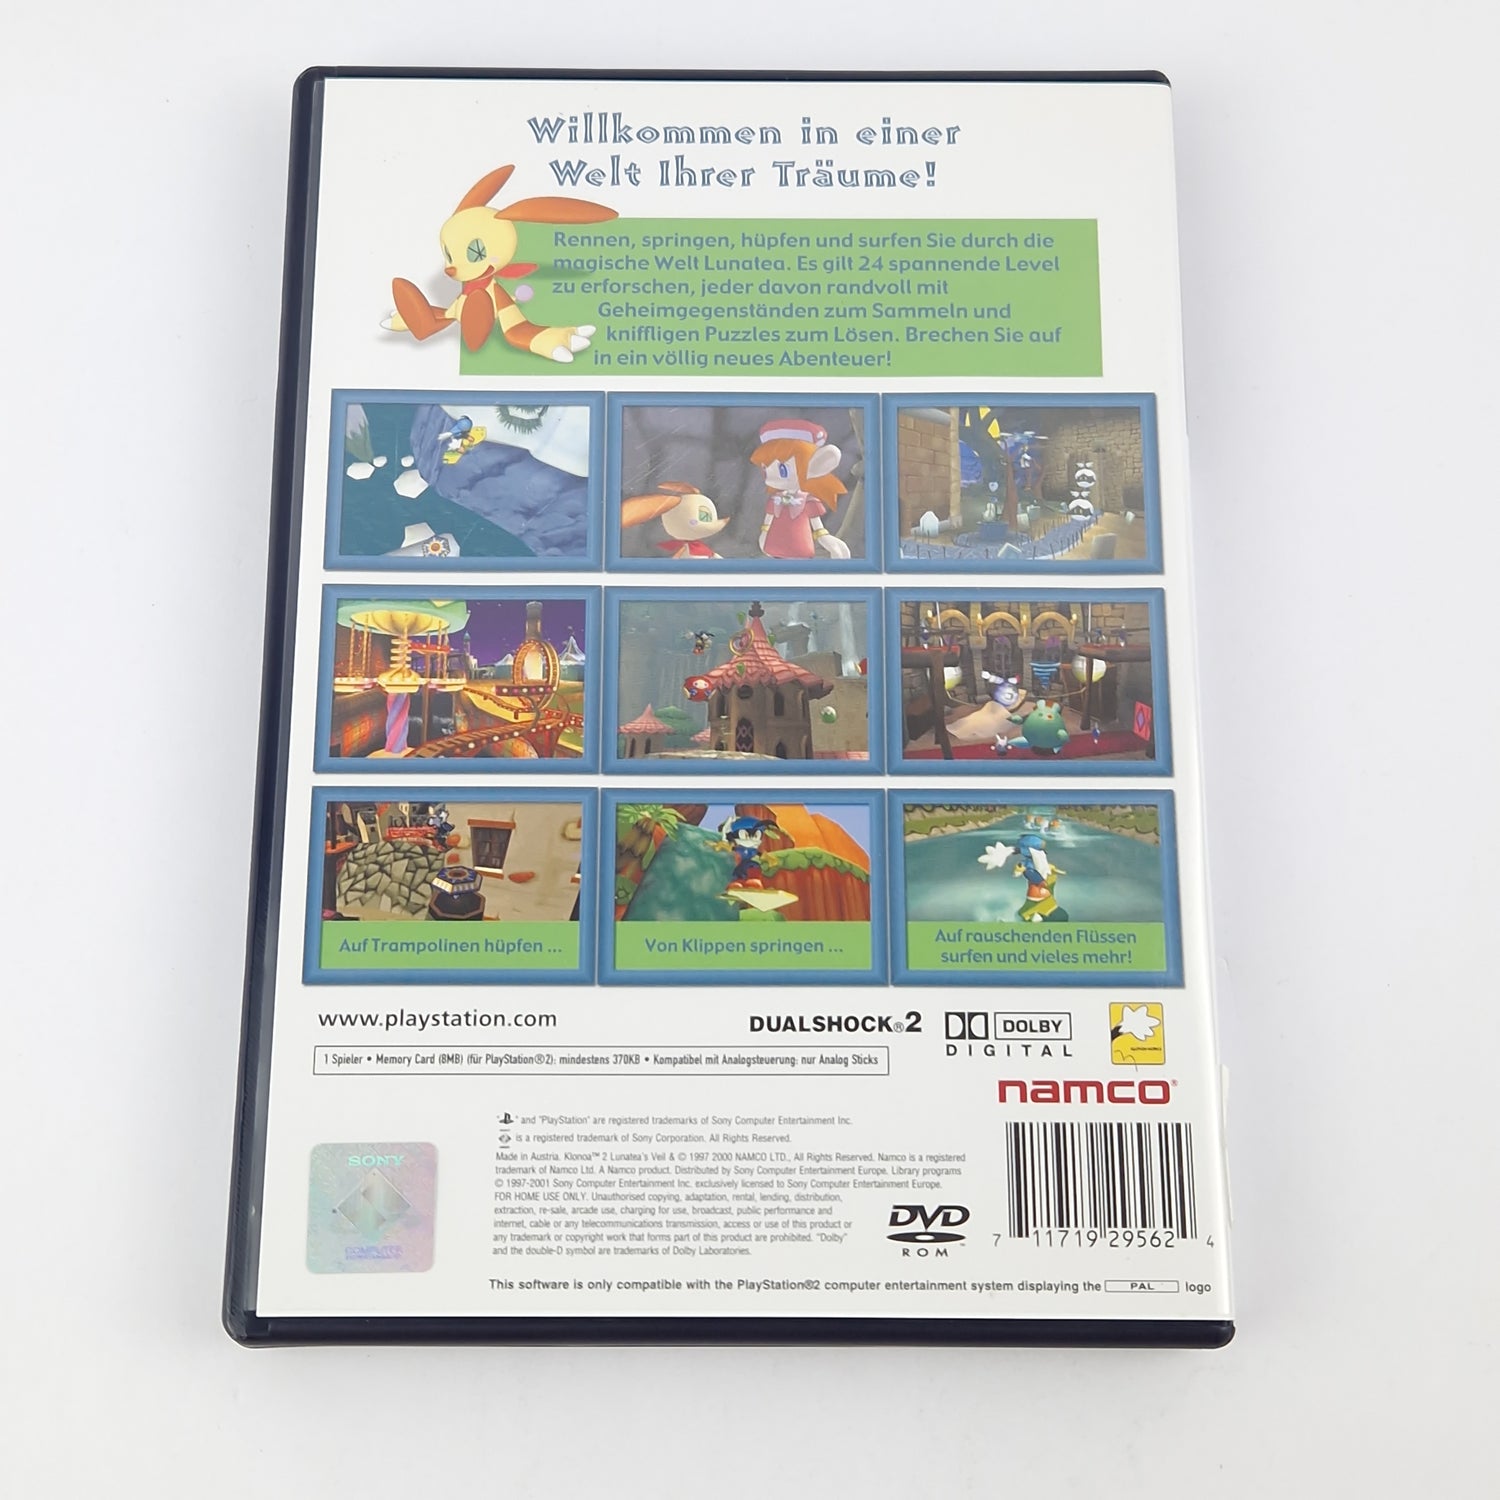 Playstation 2 Spiel : Klonoa 2 Lunatea s Veil - CD Disk Anleitung OVP SONY PS2